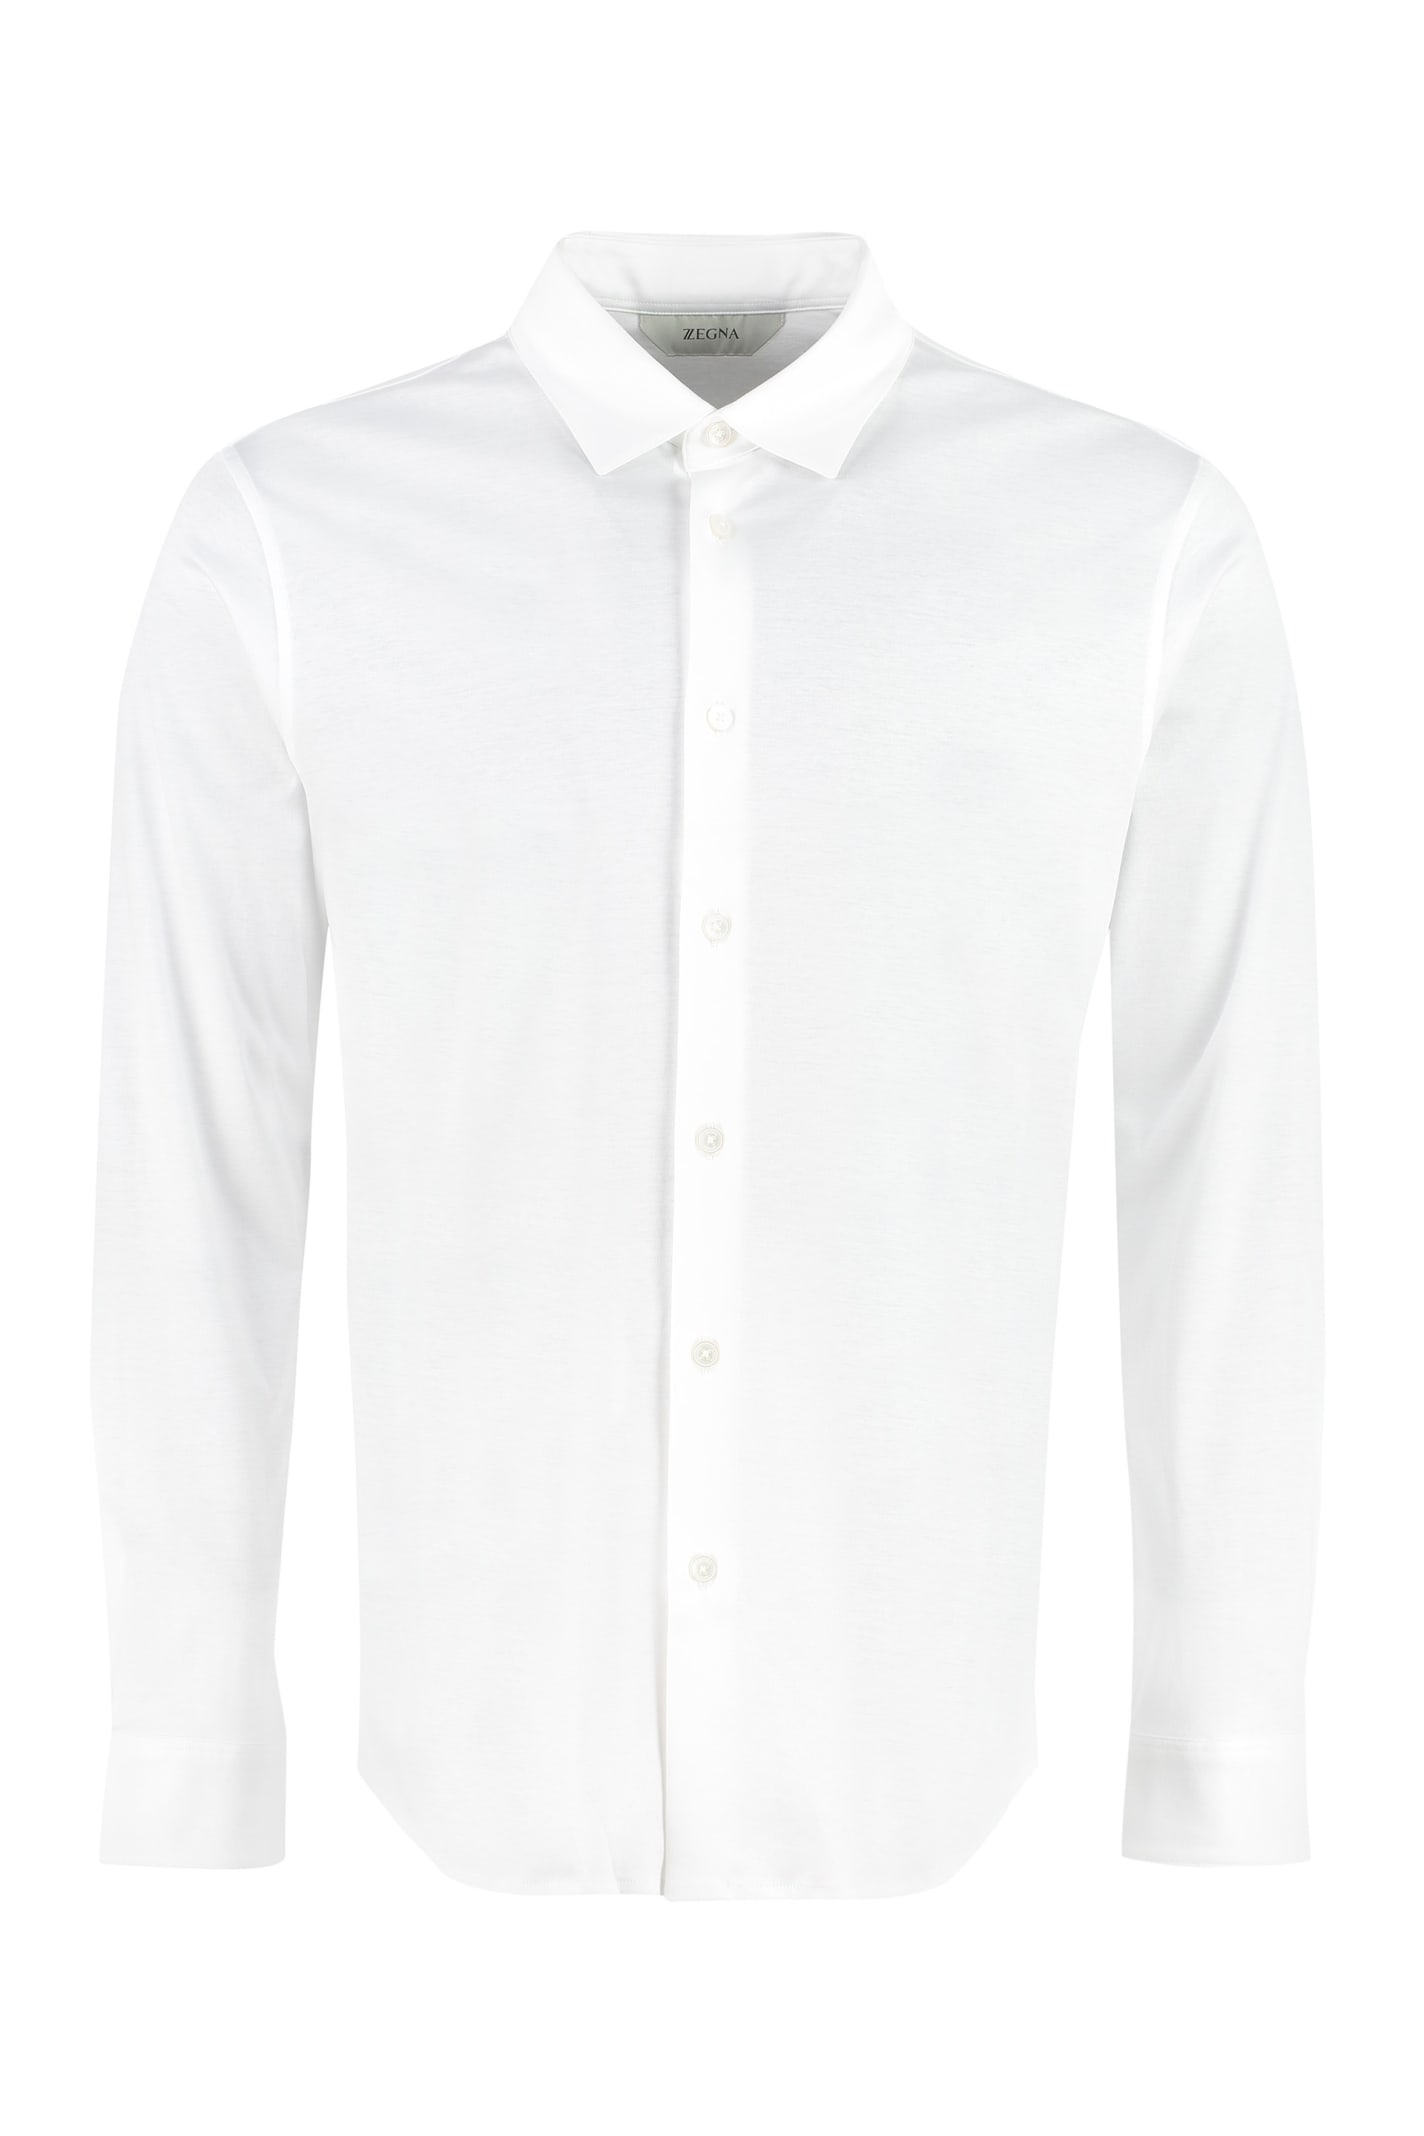 Z Zegna Classic Italian Collar Cotton Shirt